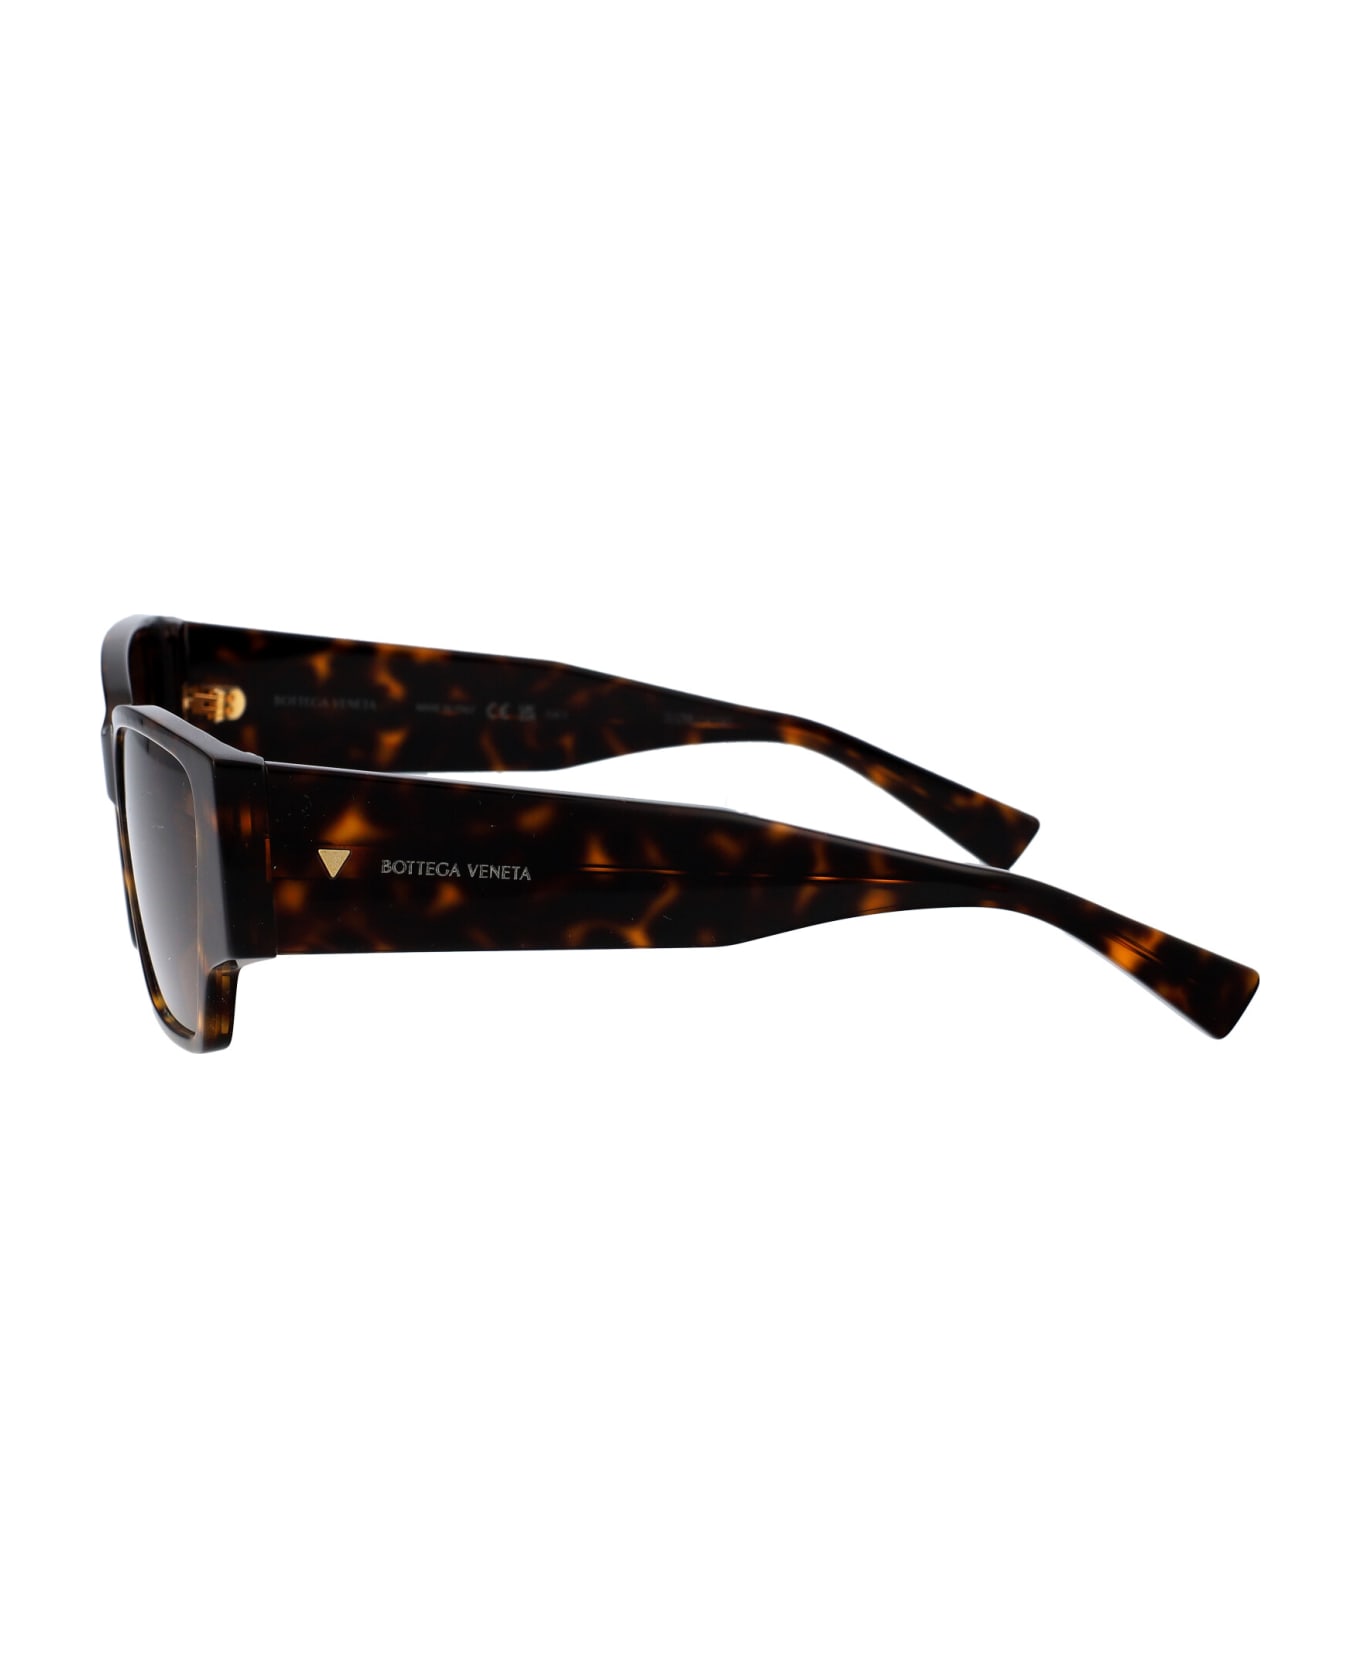 Bottega Veneta Eyewear Bv1285s Sunglasses - 002 HAVANA HAVANA BROWN サングラス